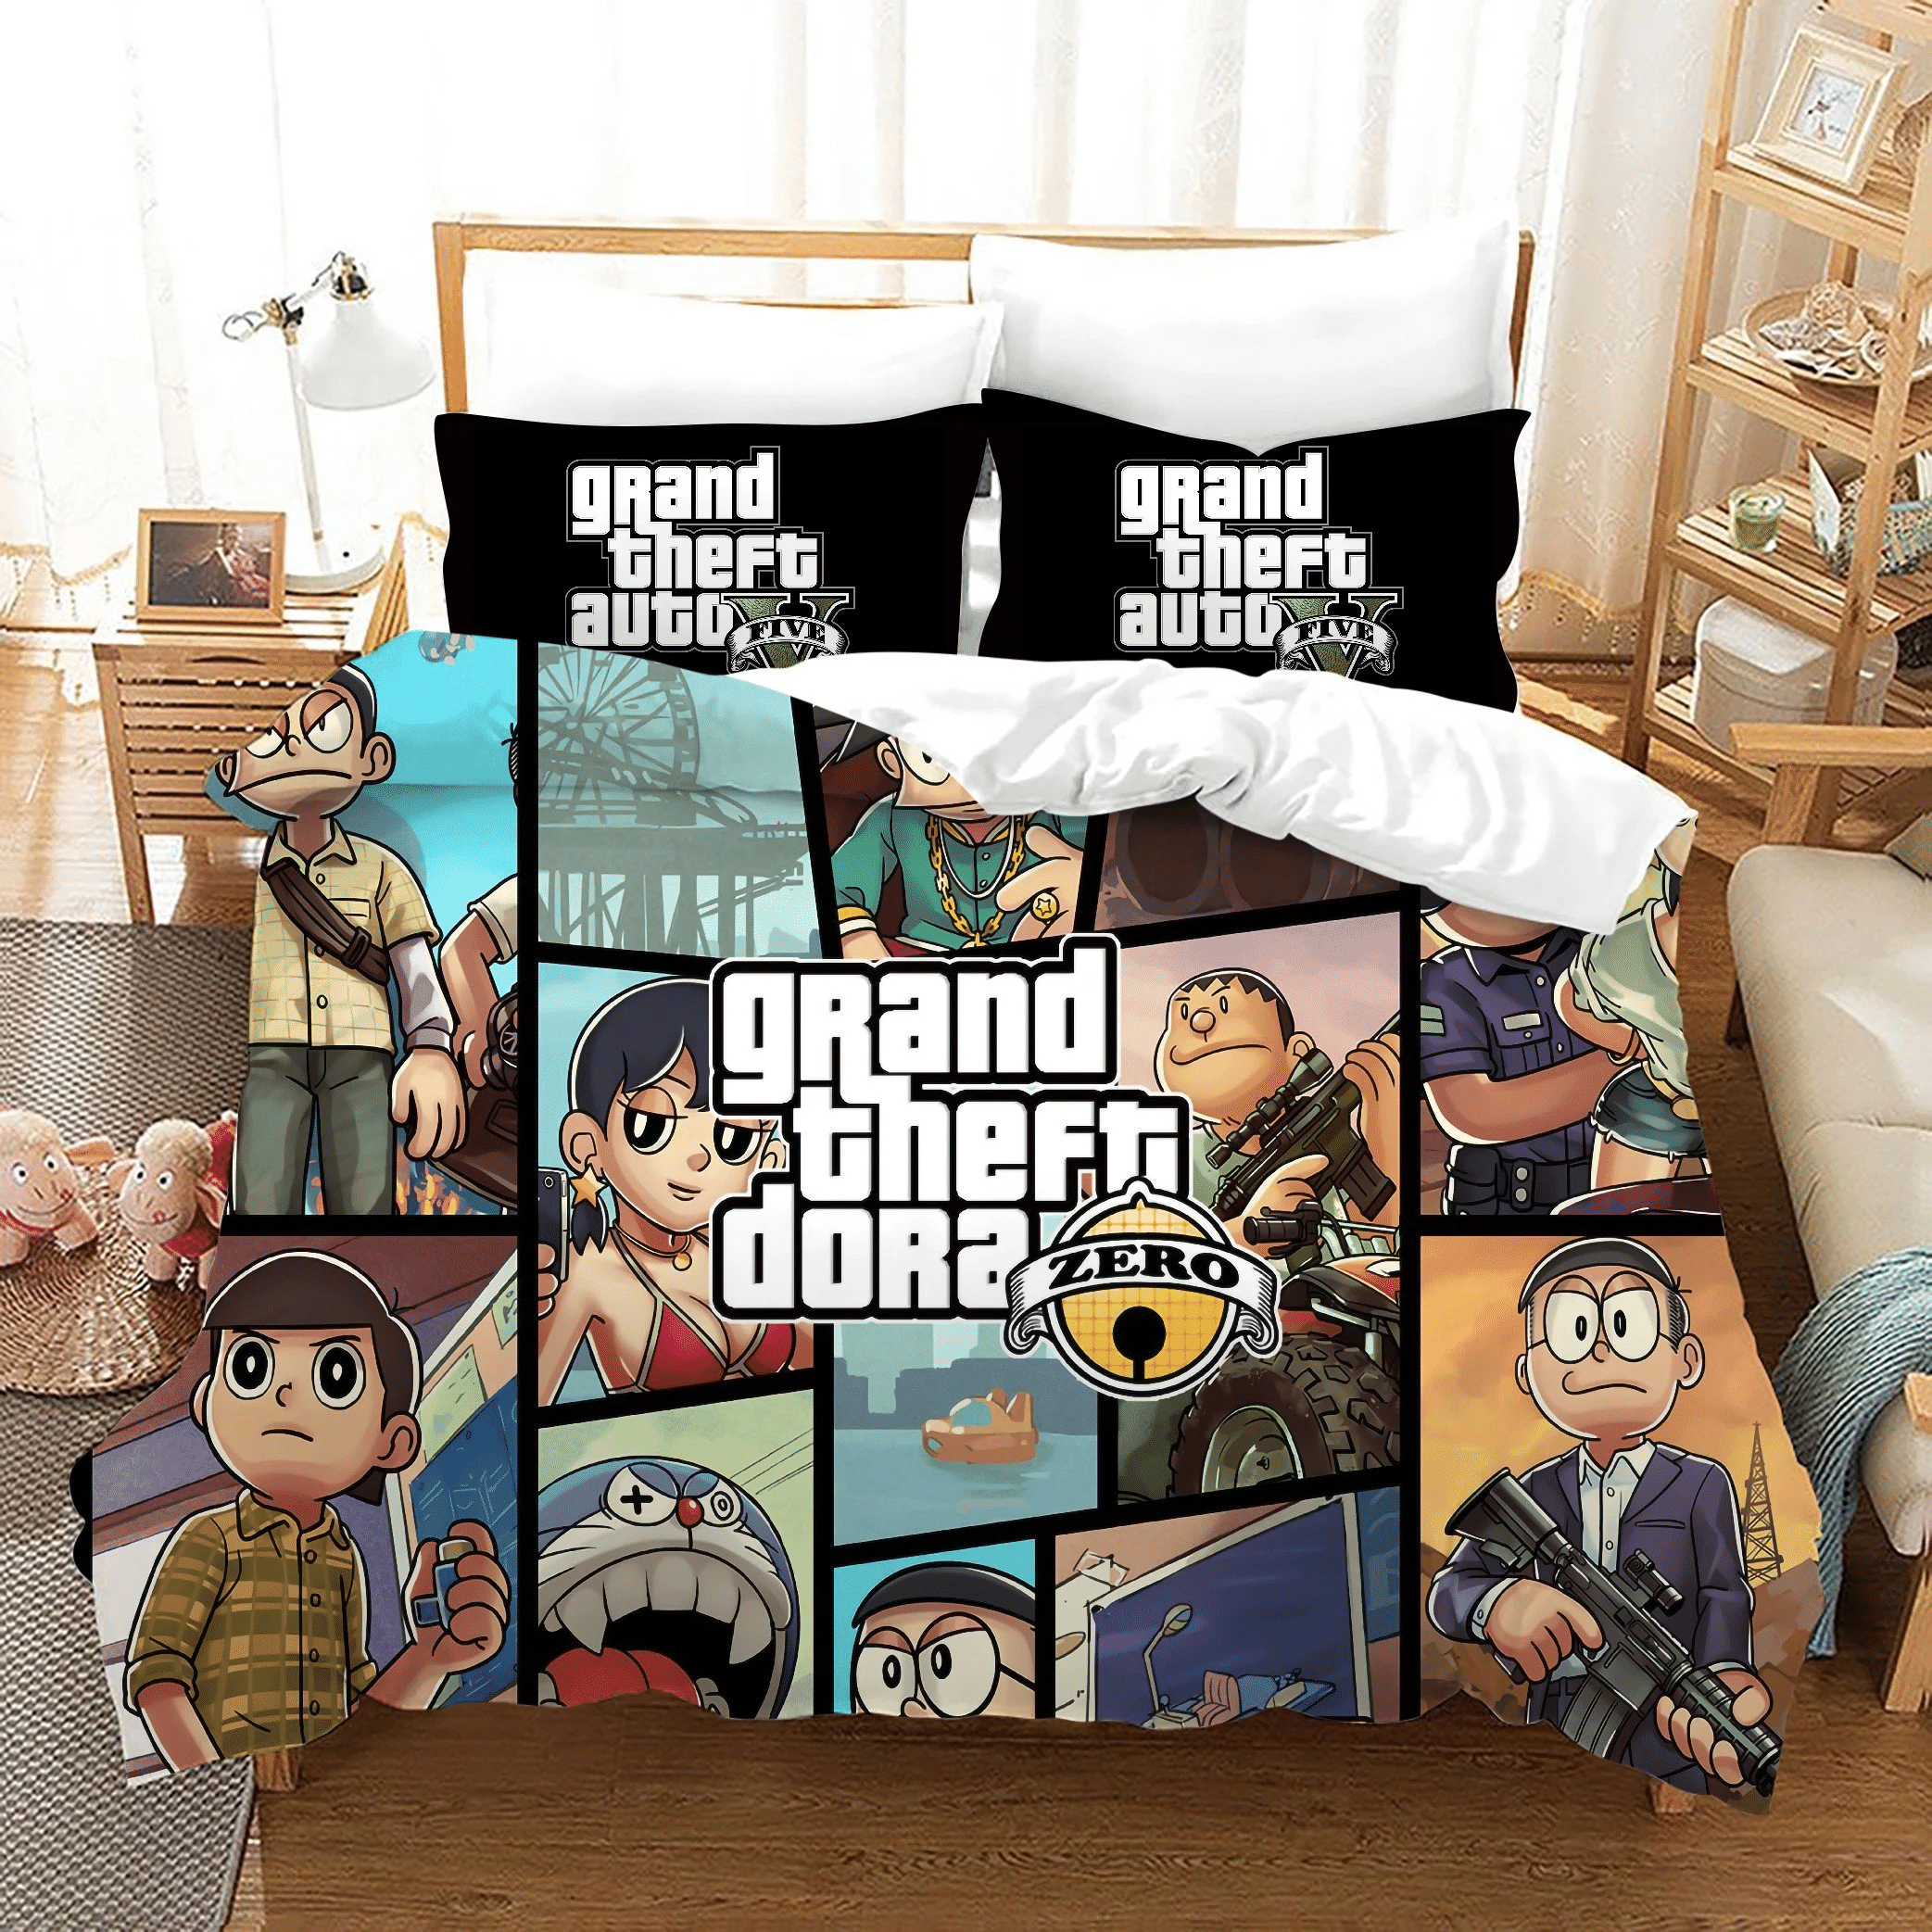 Grand Theft Auto 26 Duvet Cover Pillowcase Bedding Sets Home